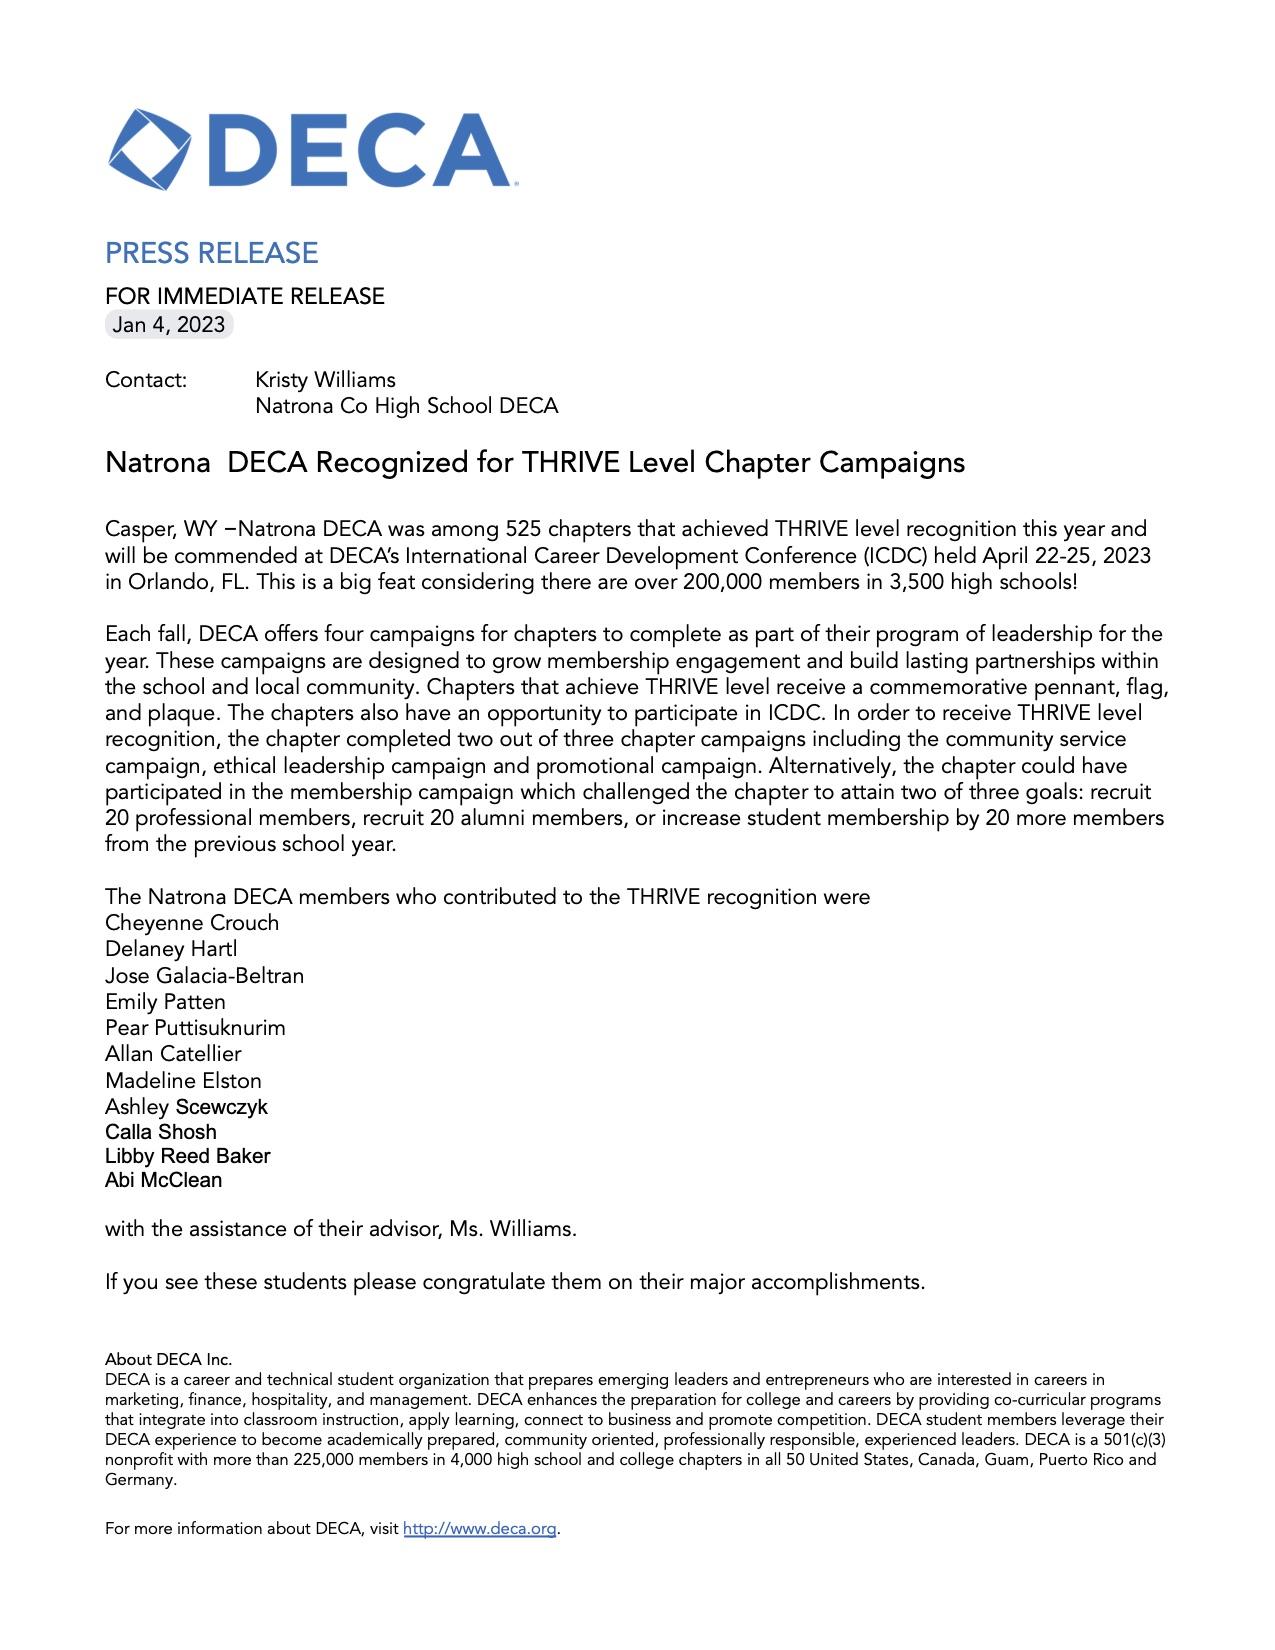 DECA Press Release